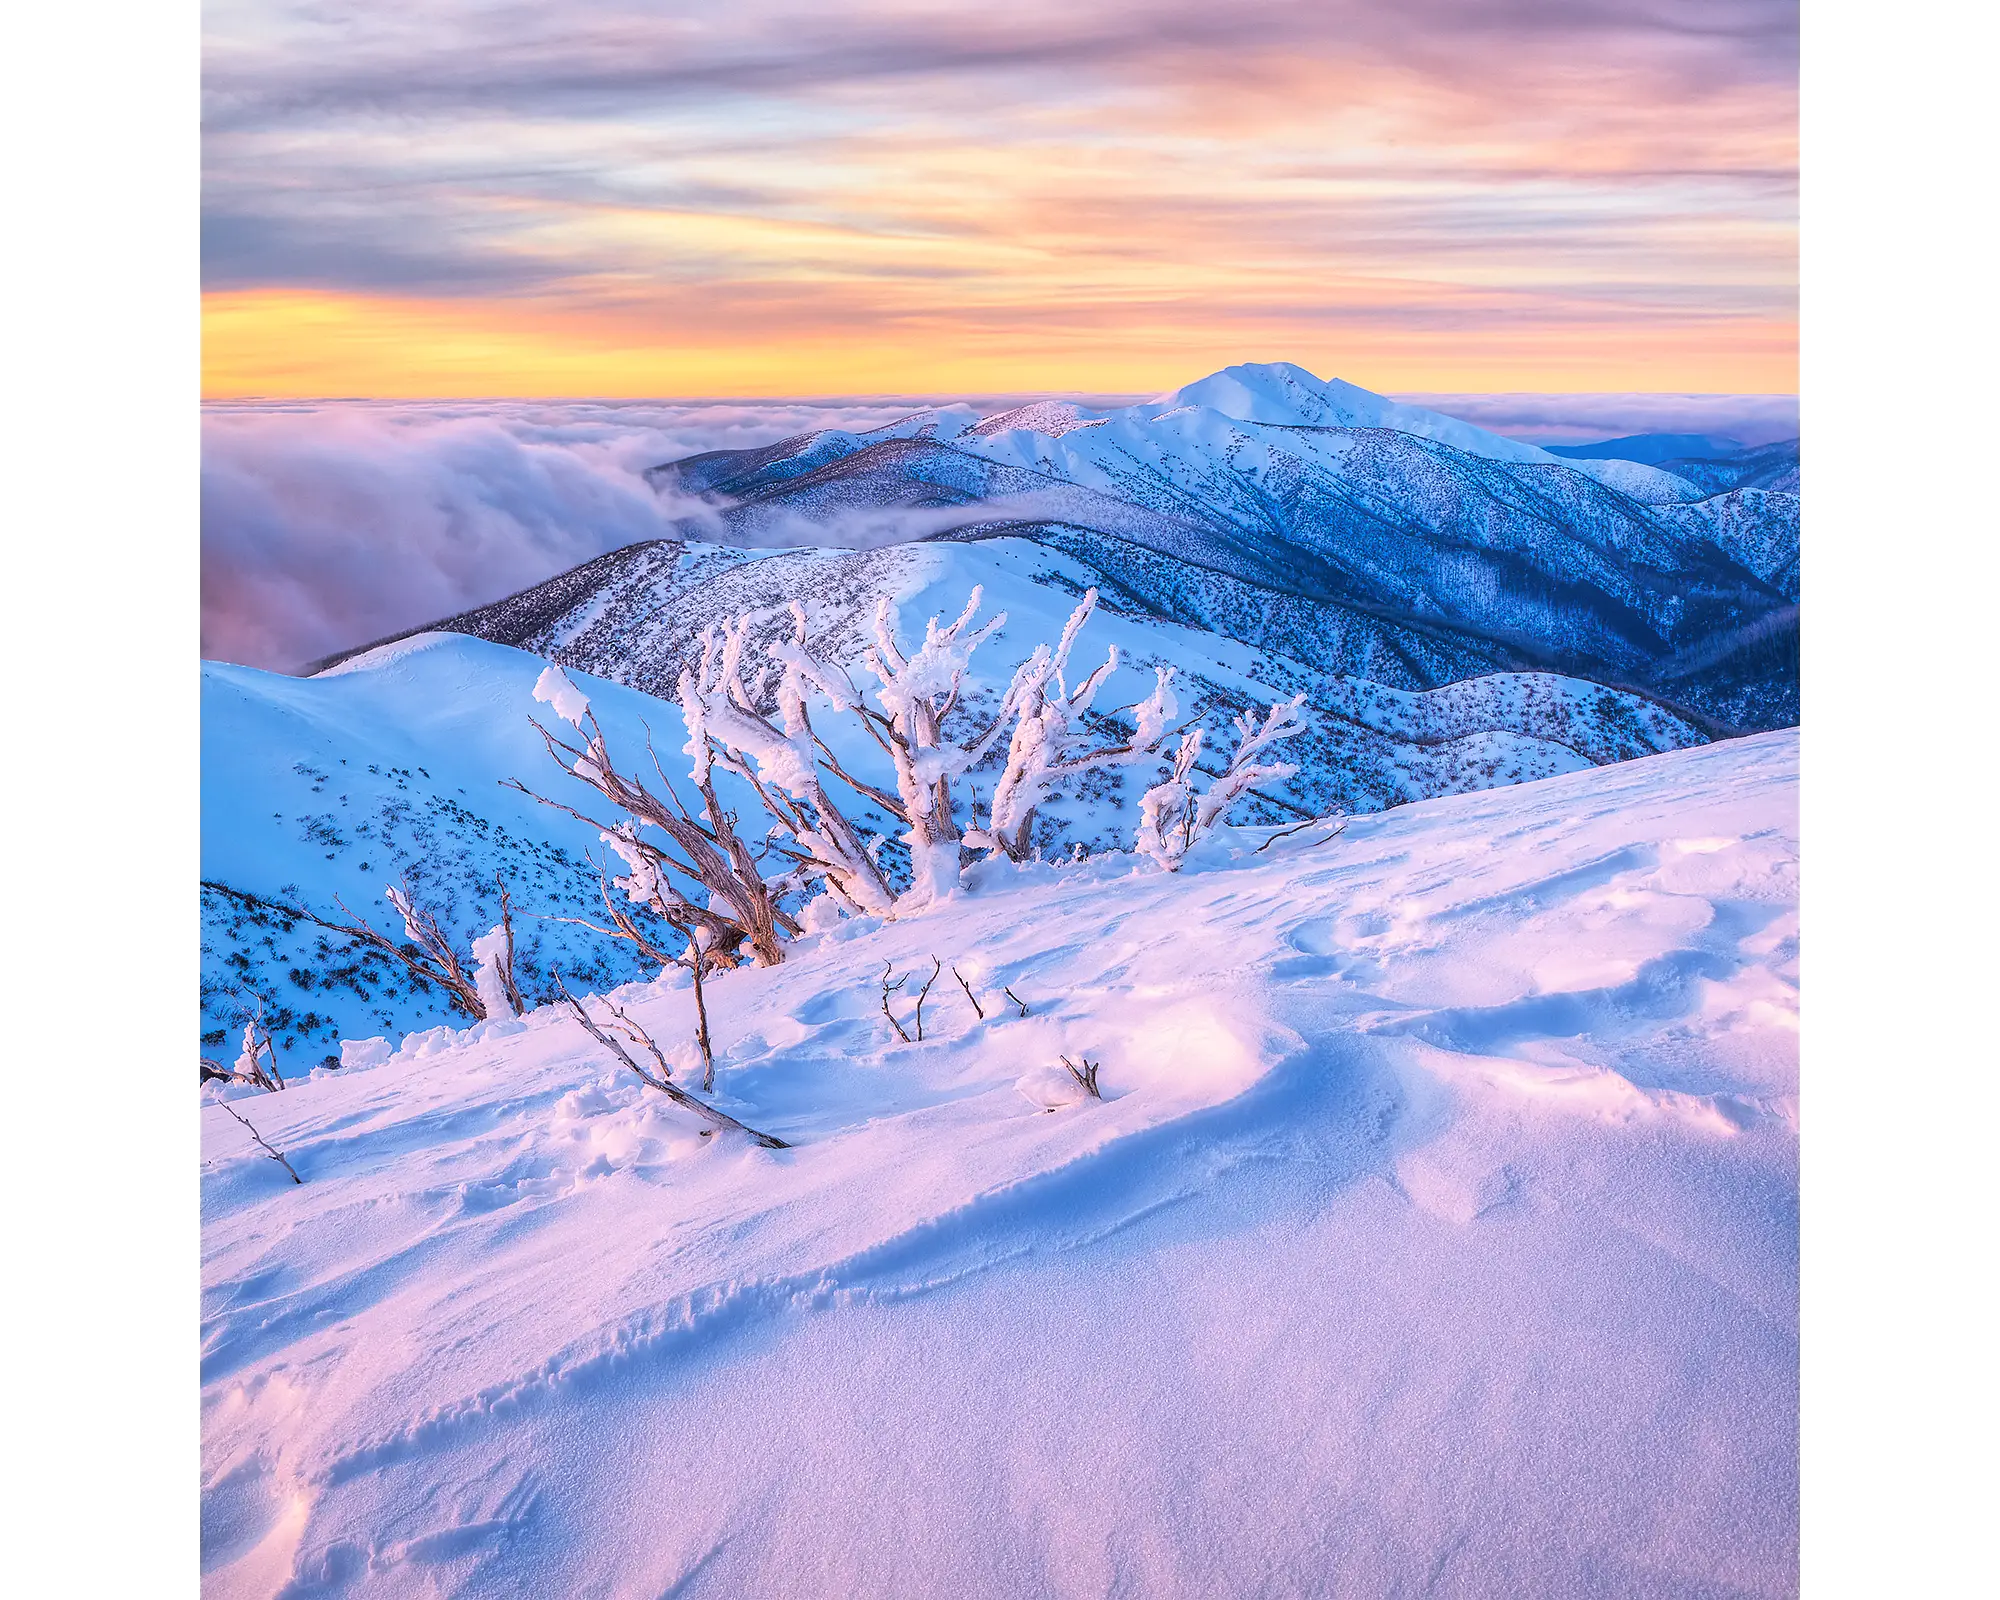 Memories Of Winter - sunset light over Mount Feathertop.